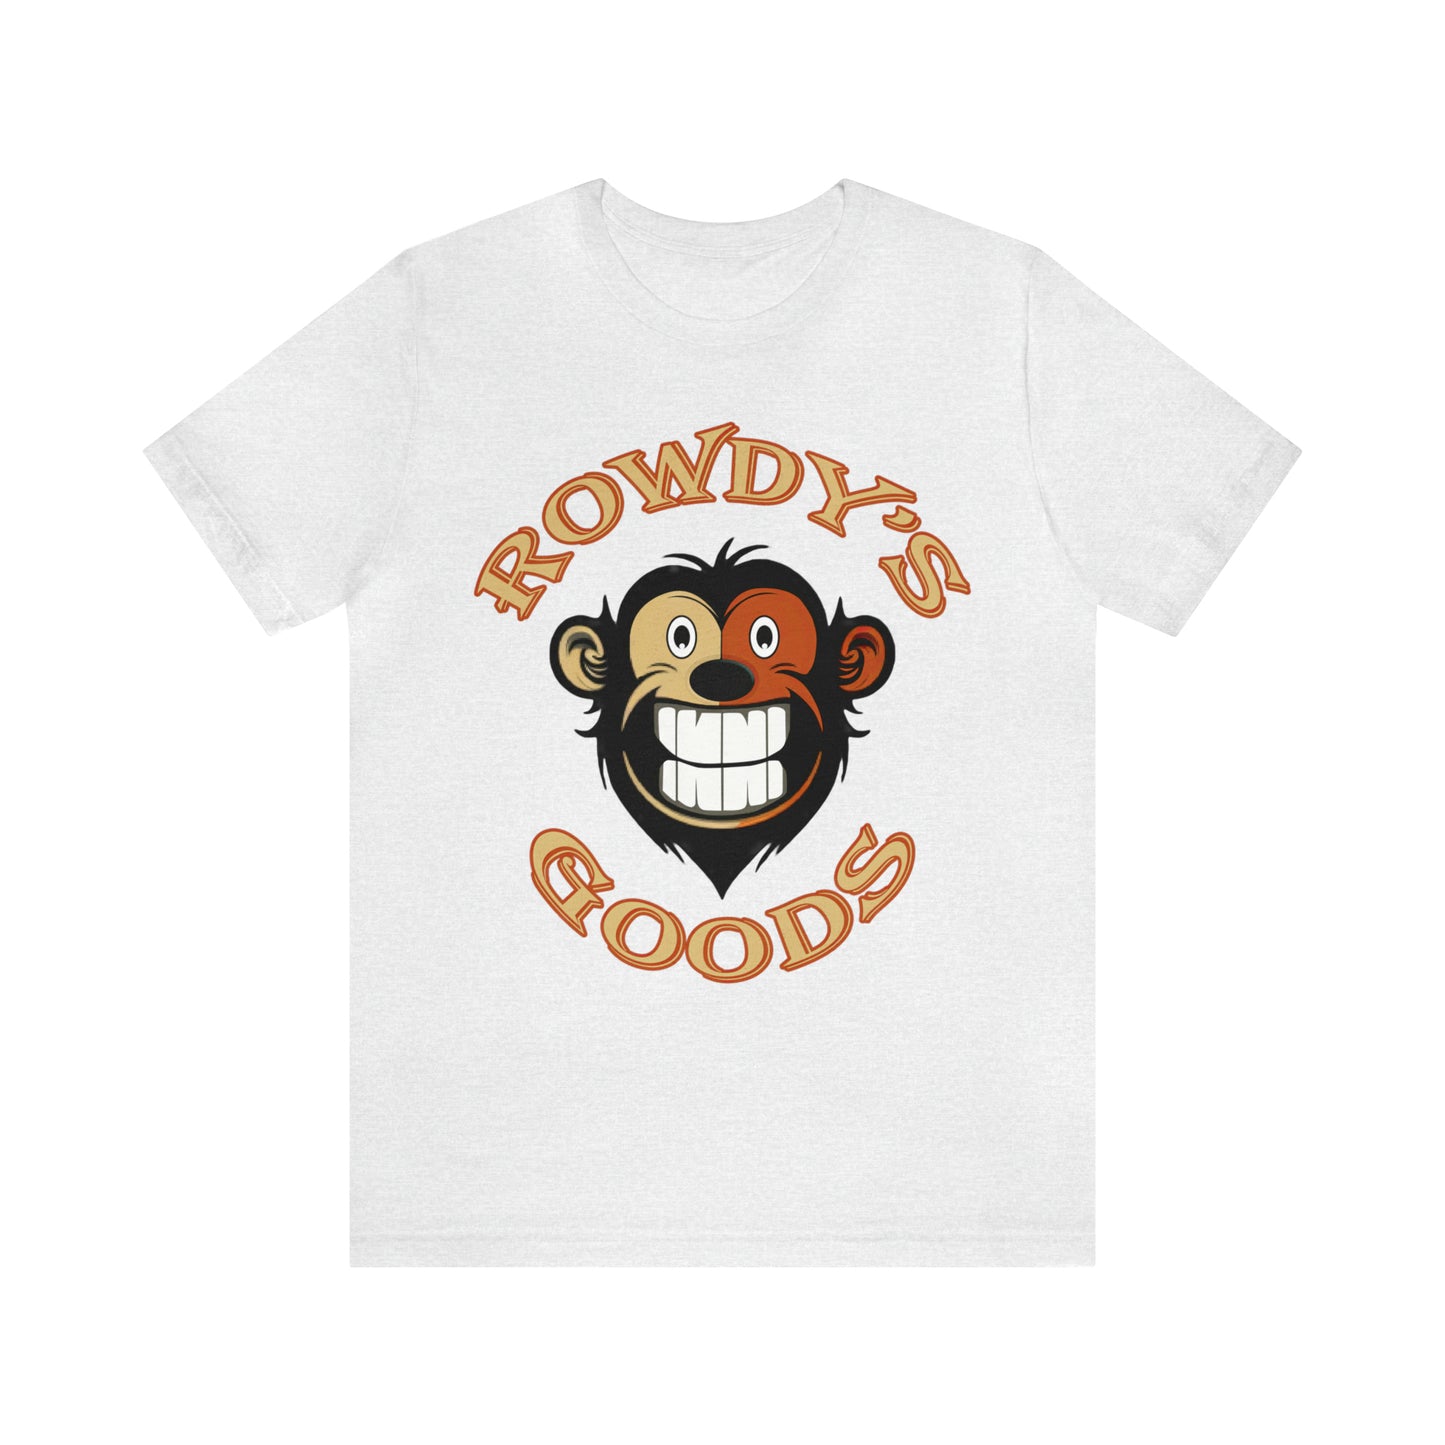 Rowdy's Goods - Original Brand T-Shirt